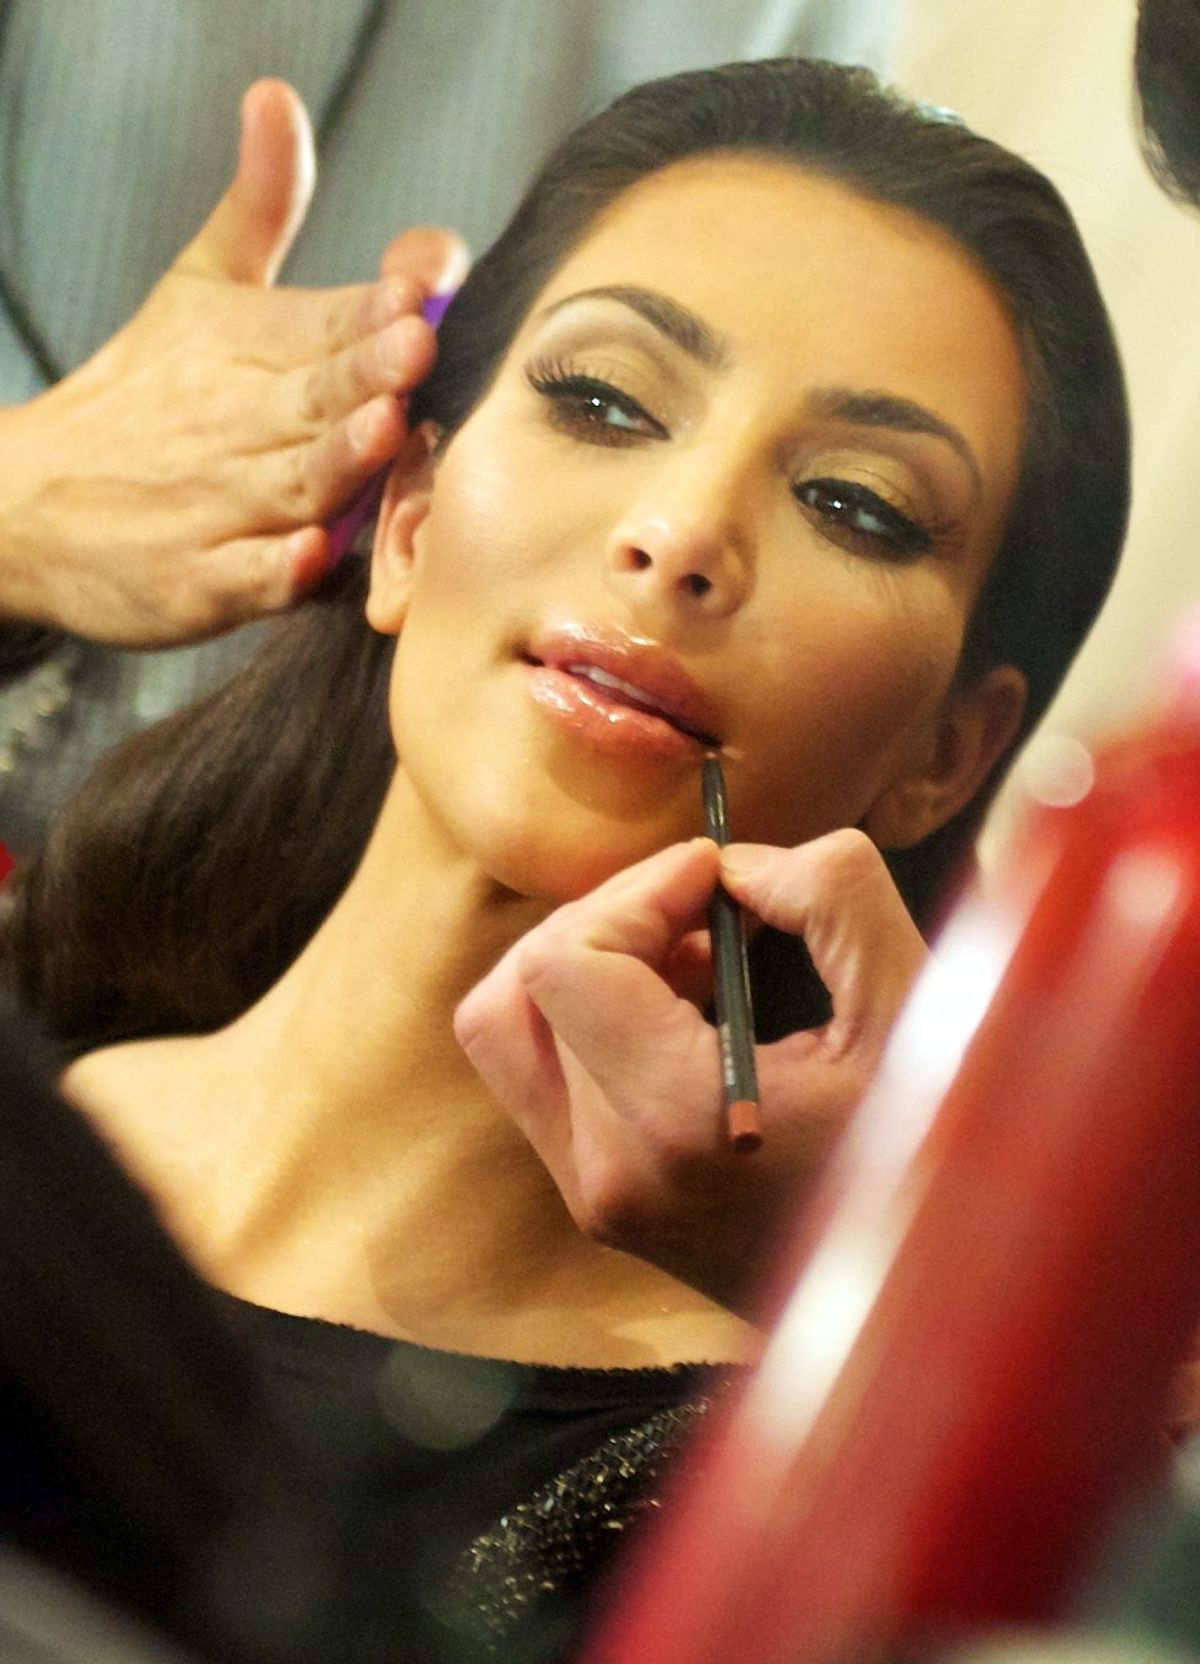 Why Does Kim Kardashian's Selfie Bother You?